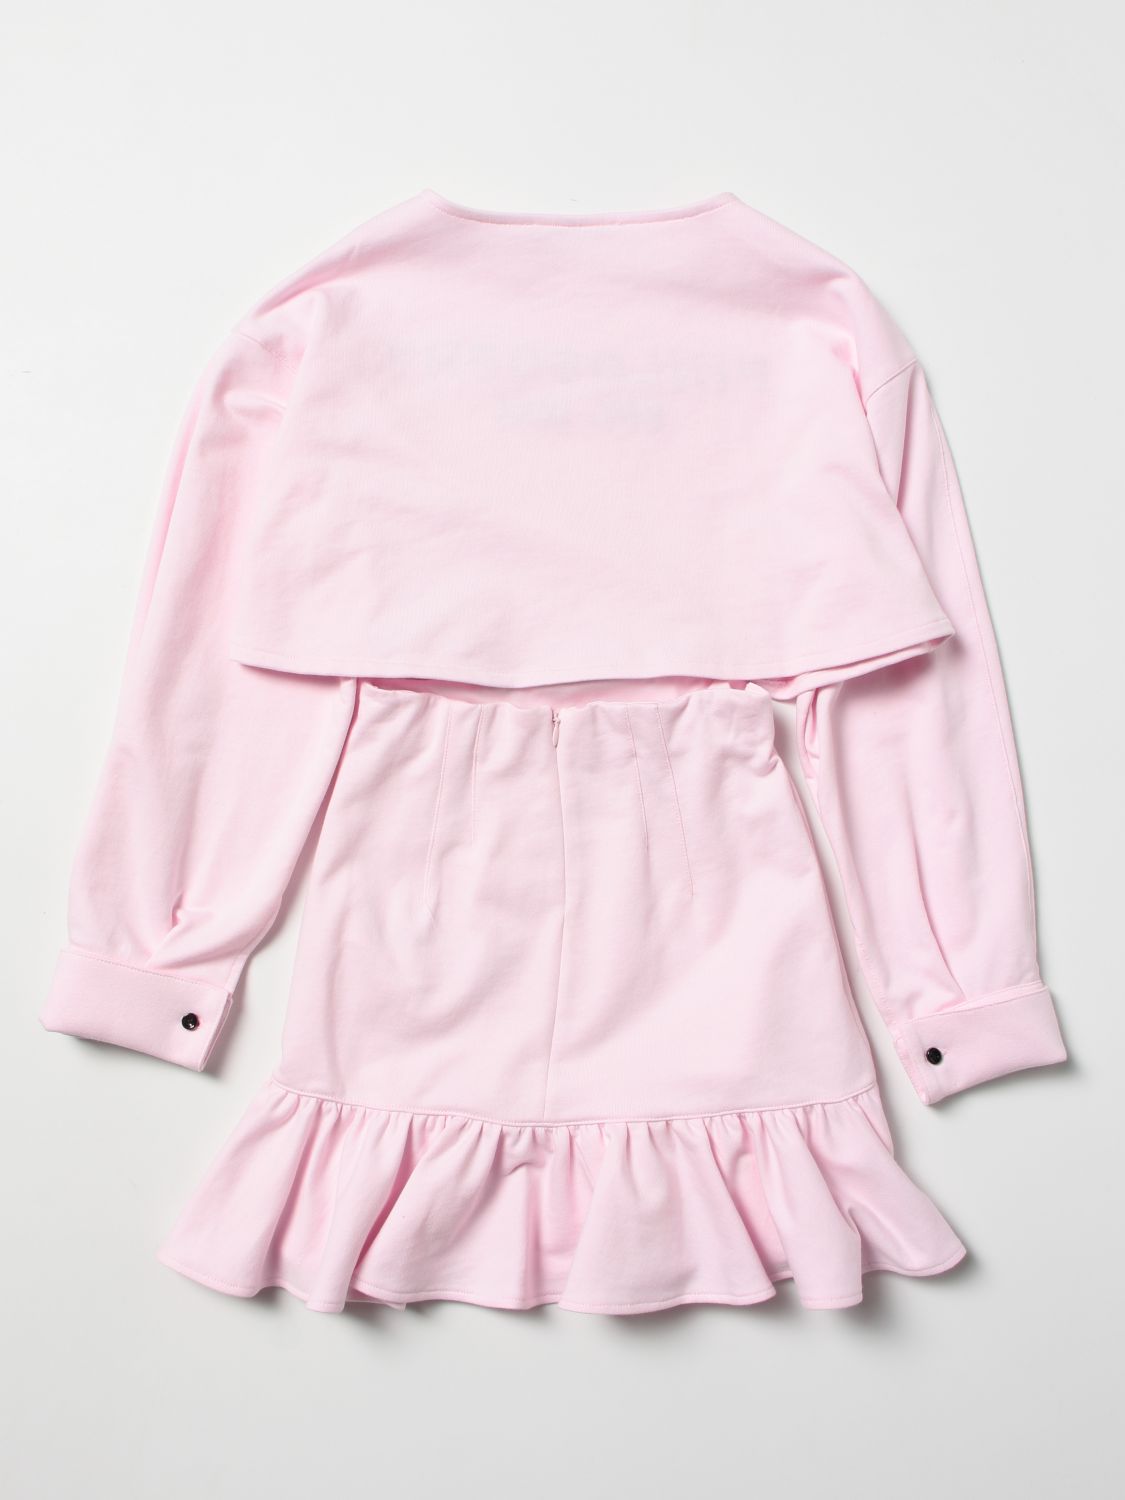 Dress Philosophy Di Lorenzo Serafini: Philosophy Di Lorenzo Serafini dress for girl pink 2